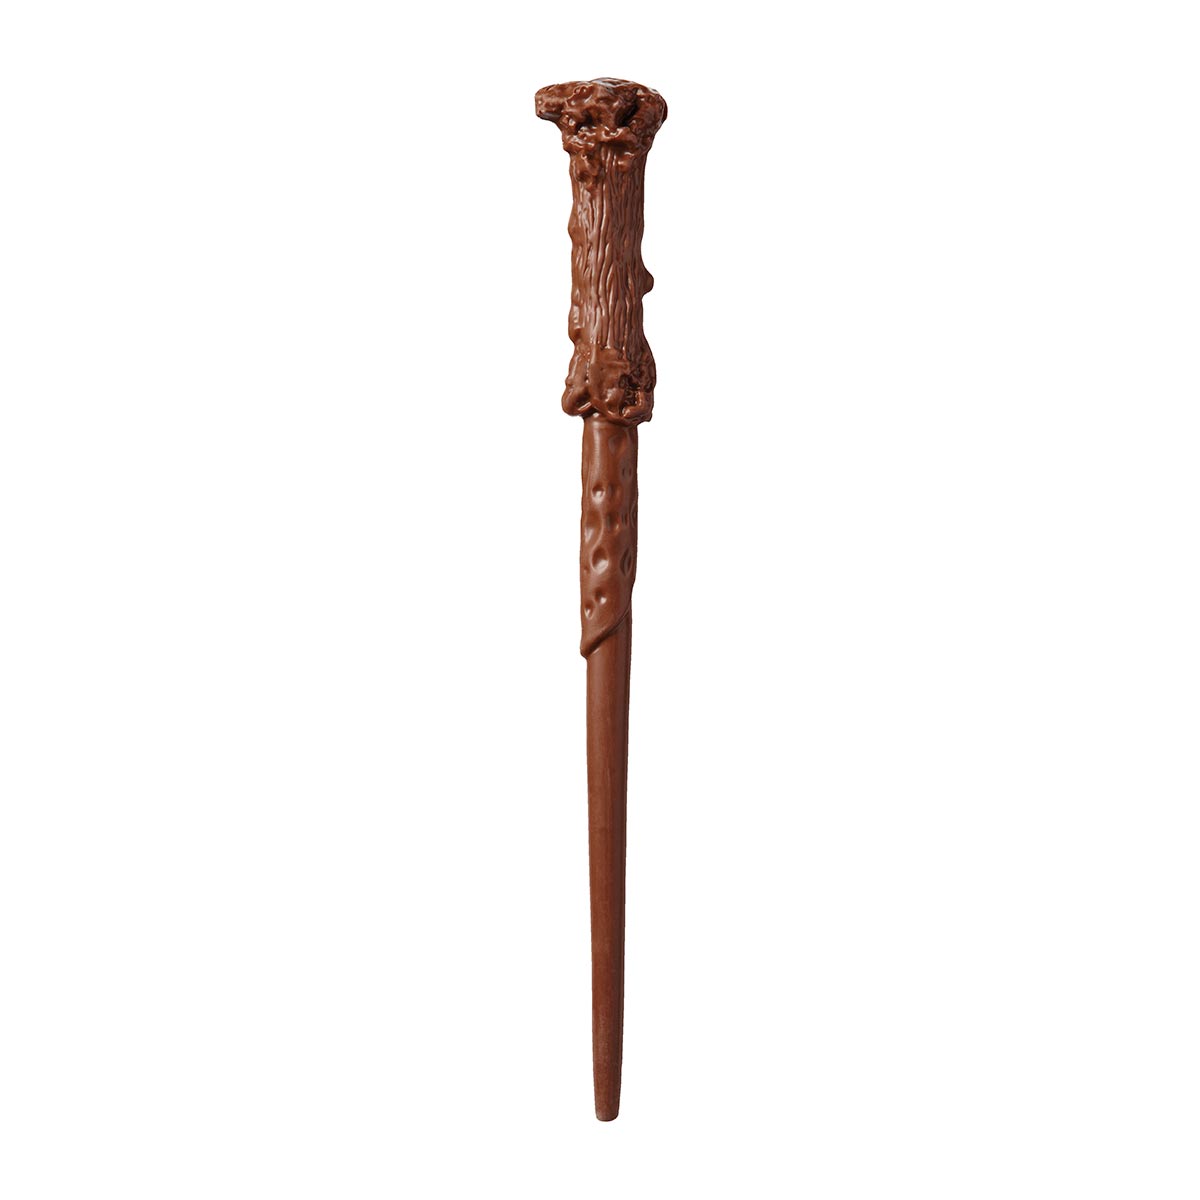 Harry Potter™ Chocolate Wand - 1.5 oz